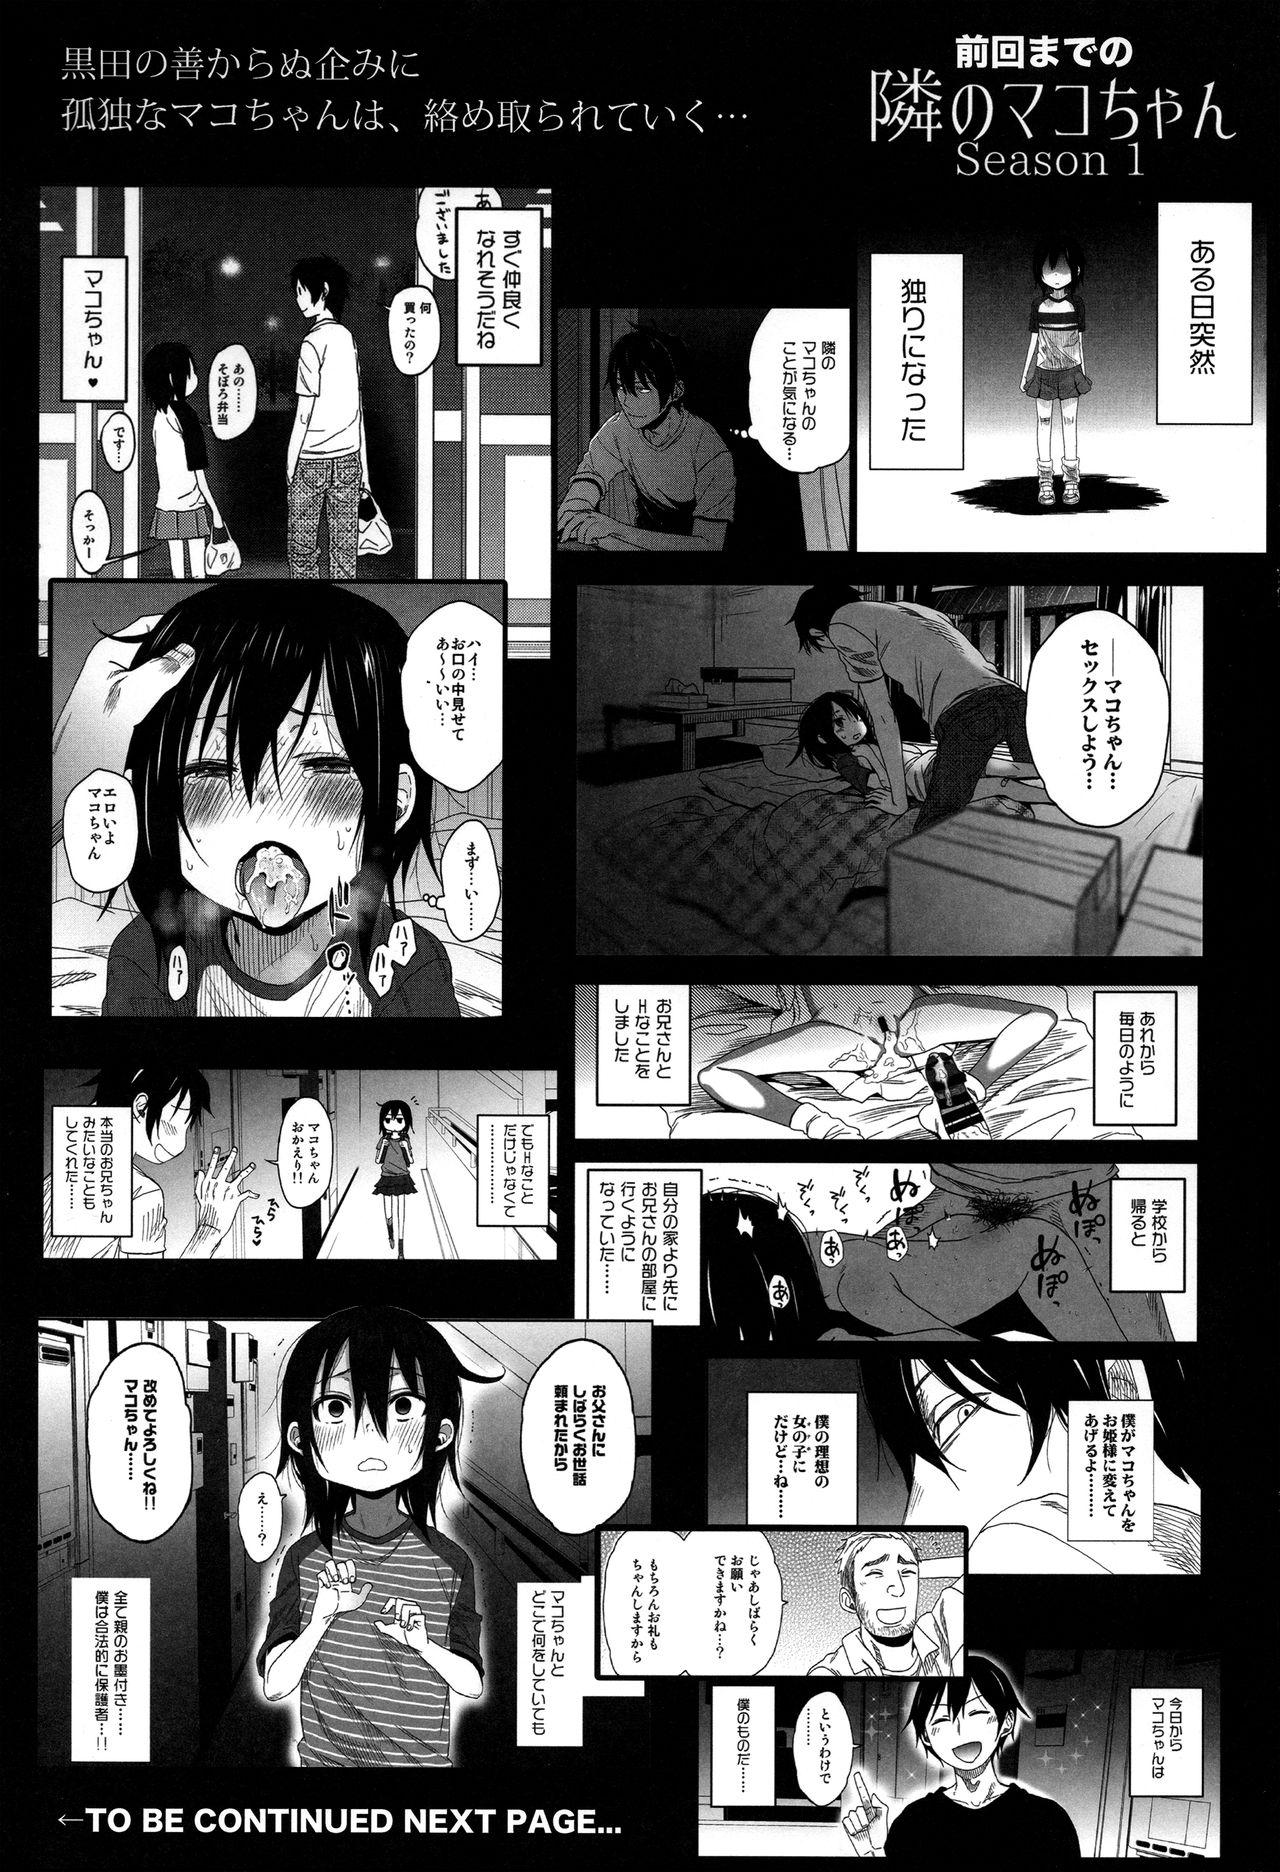 Firsttime Tonari no Mako-chan Season 2 Vol. 1 - Original Eating - Page 3